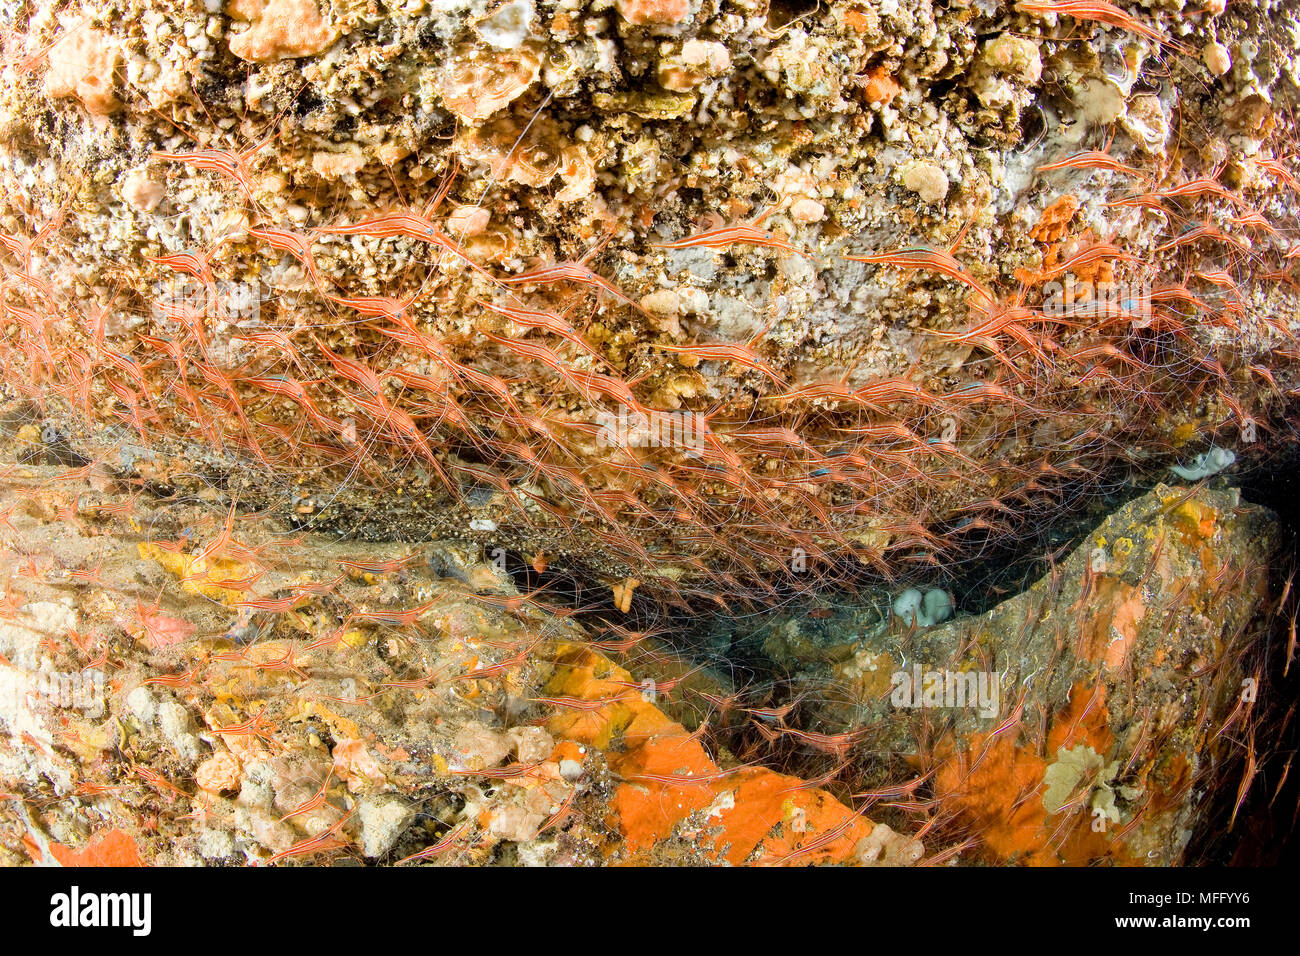 Shrimp's cave, Narwal shrimp, Plesionika narval, Ischia Island, Italy, Tyrrhenian Sea, Mediterranean Stock Photo